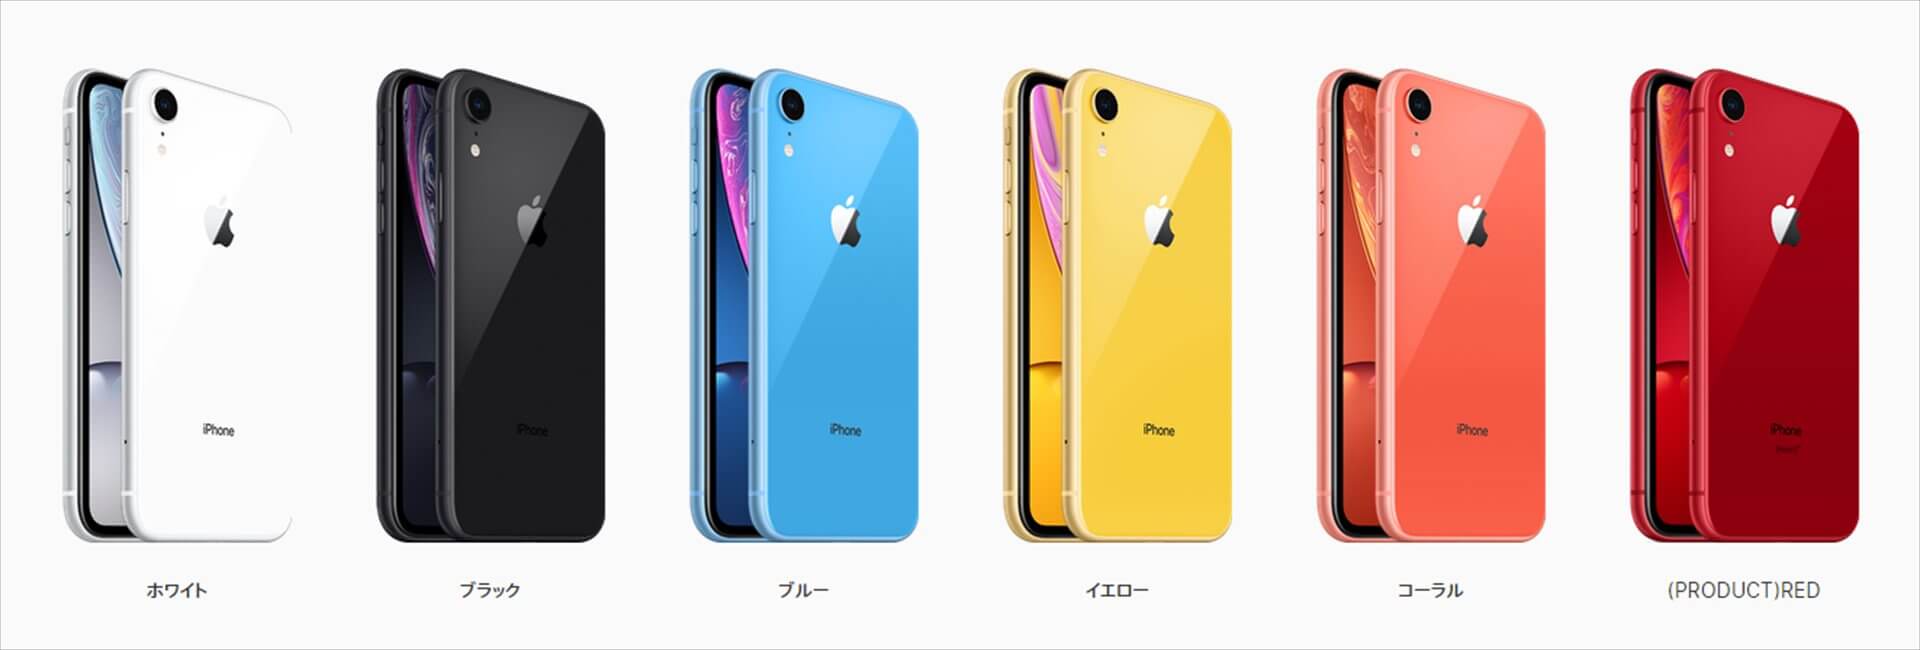 Apple、iPhone XRを発表。10月26日発売で価格は84,800円から